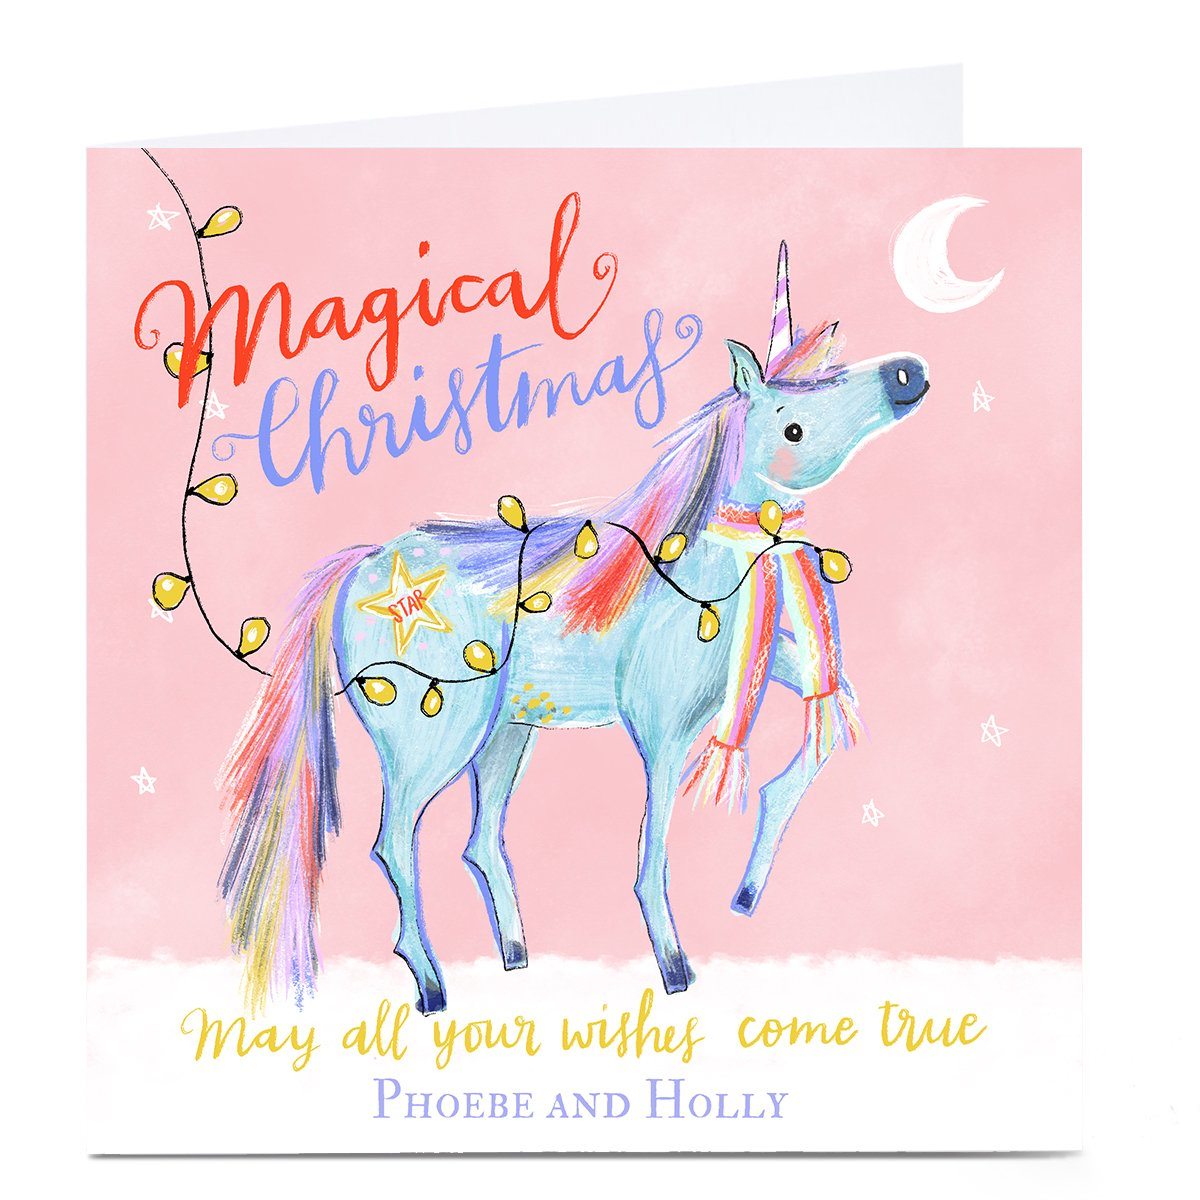 Personalised Emma Valenghi Christmas Card  - Unicorn